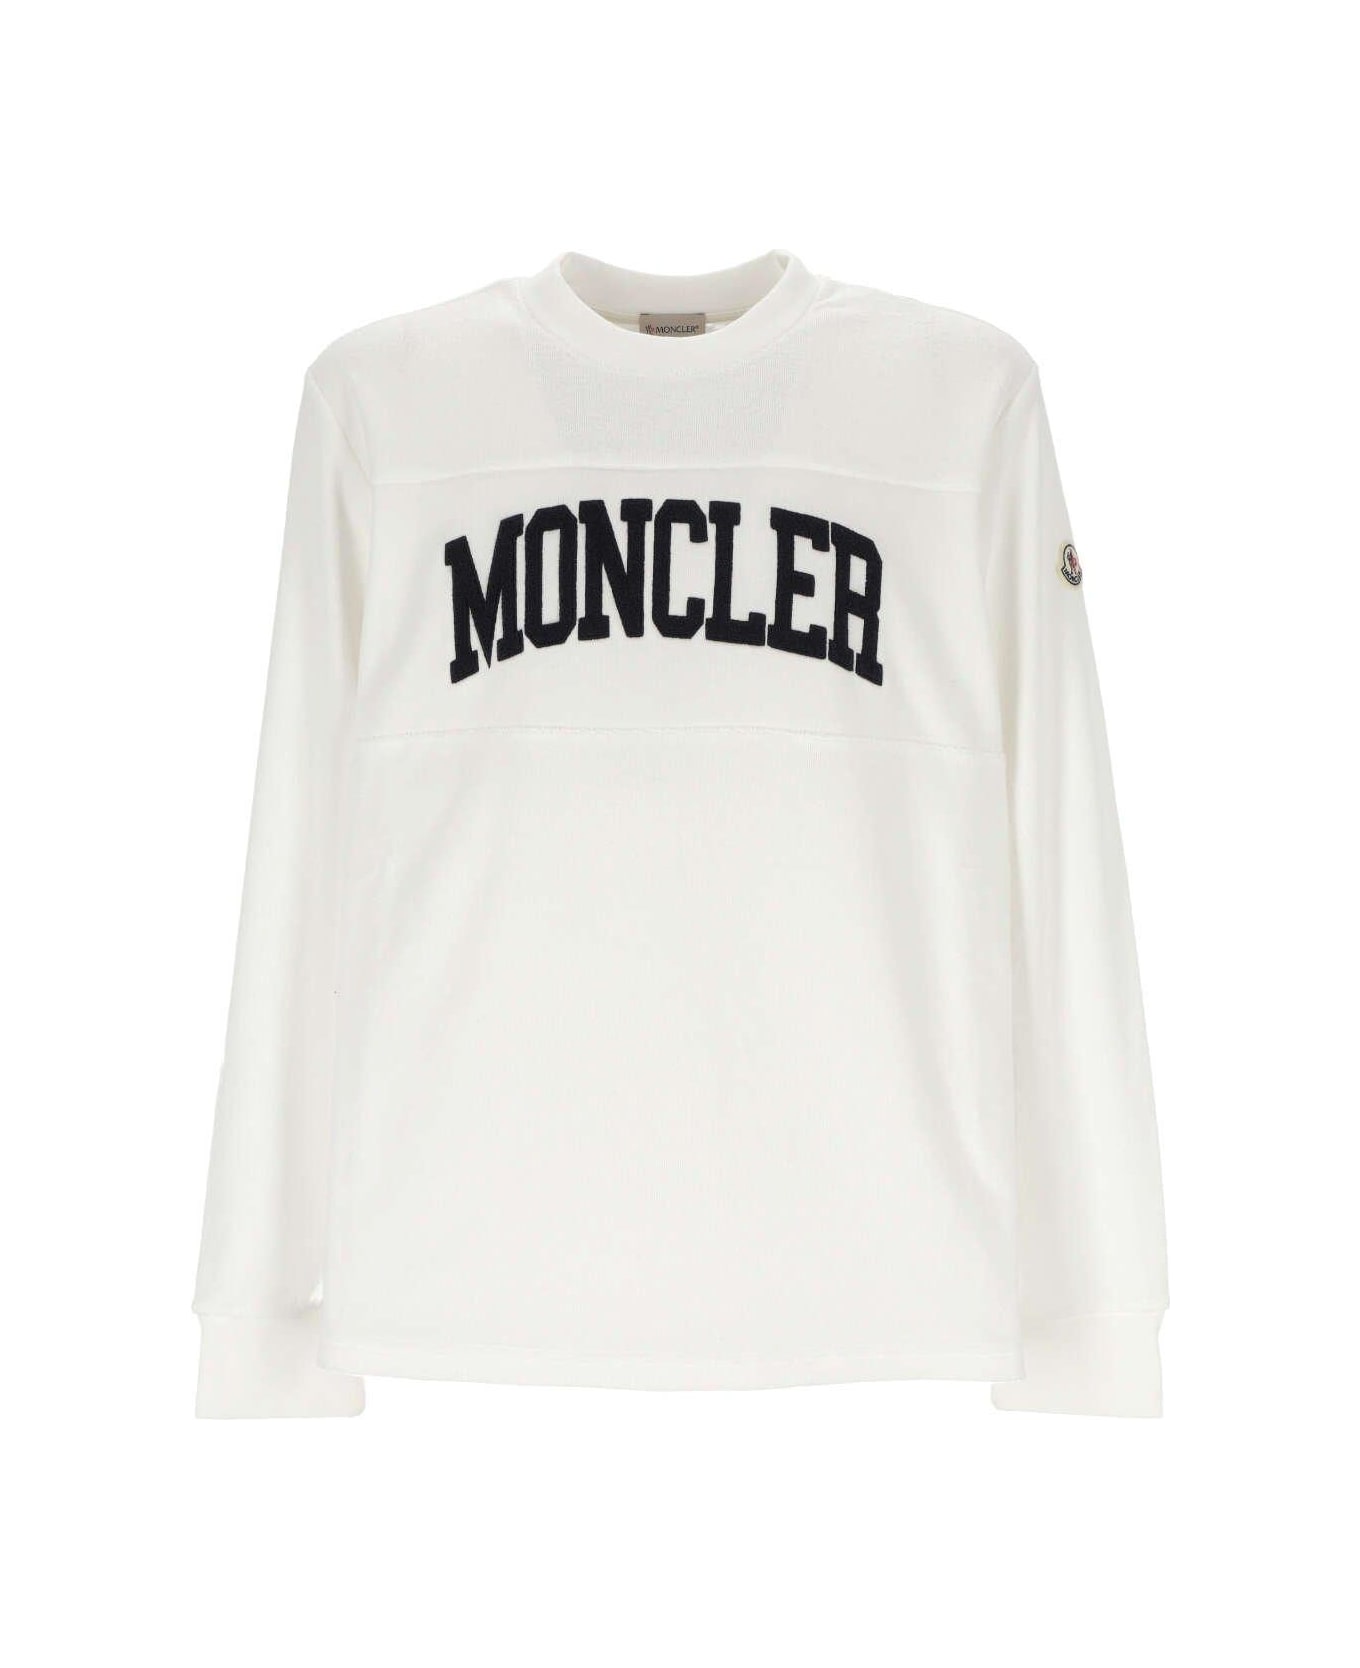 Moncler Logo Patch Crewneck Sweatshirt